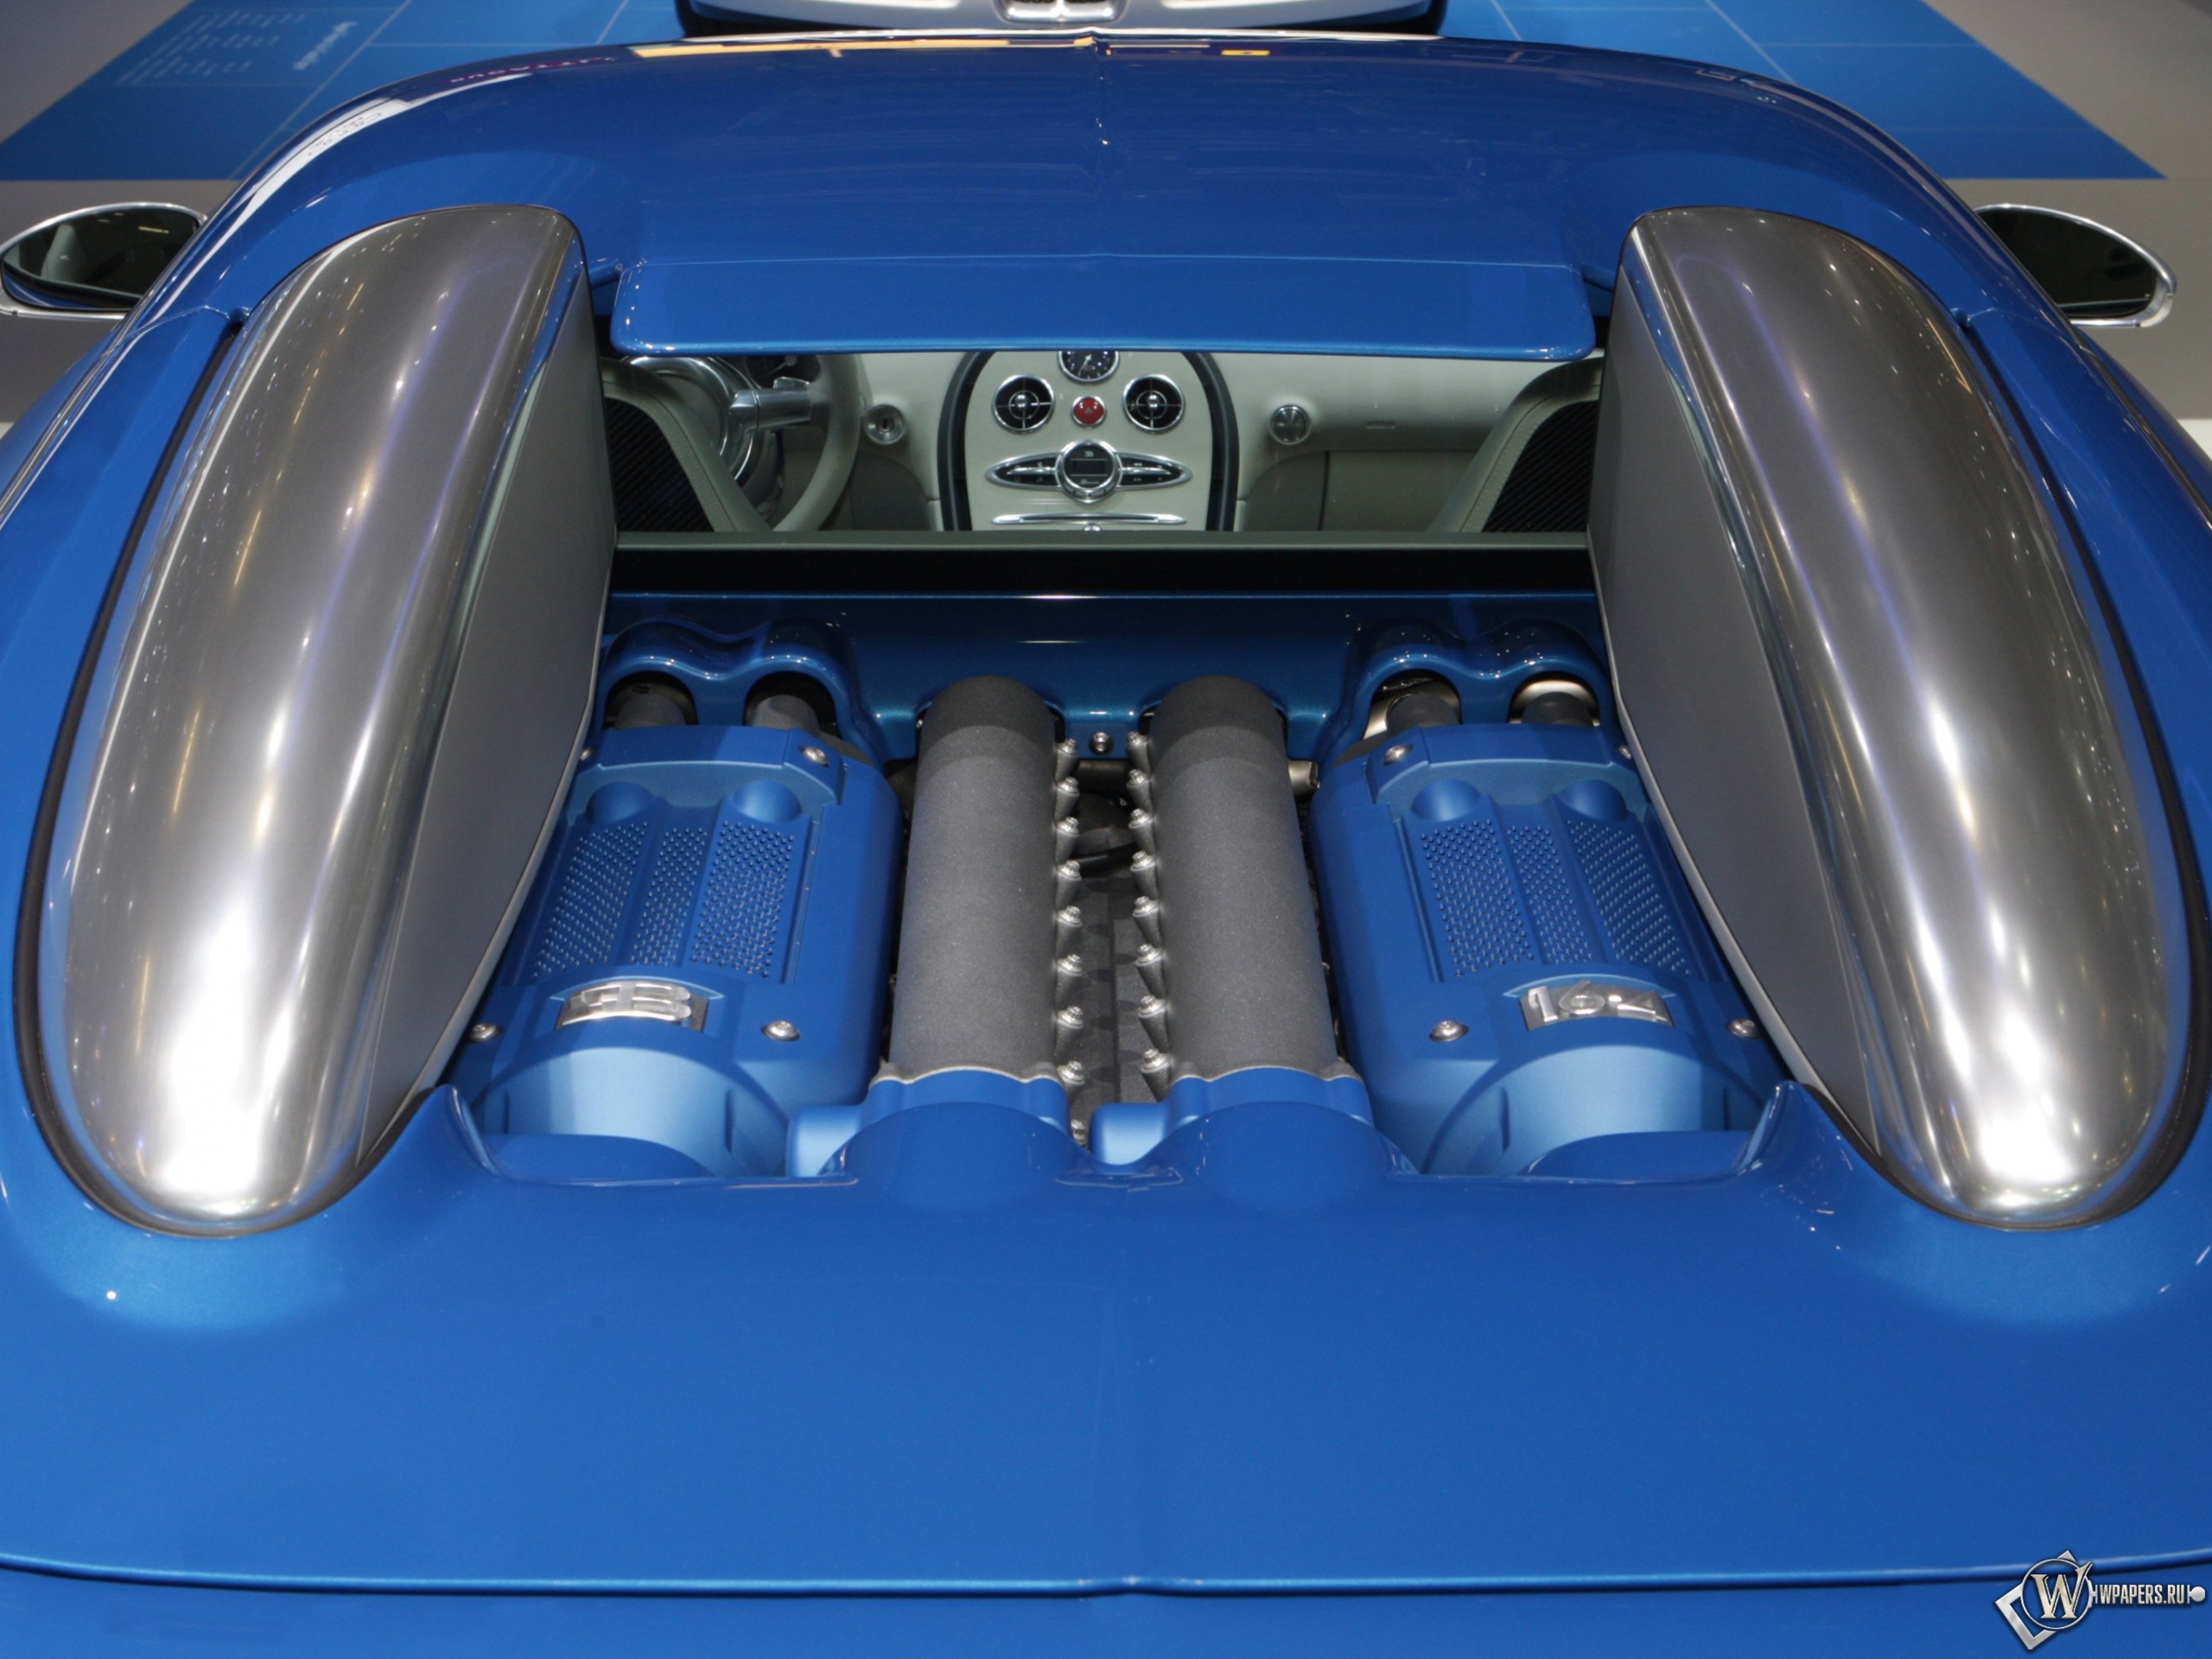 Bugatti Veyron Bleu Centenaire (2009) 2560x1920